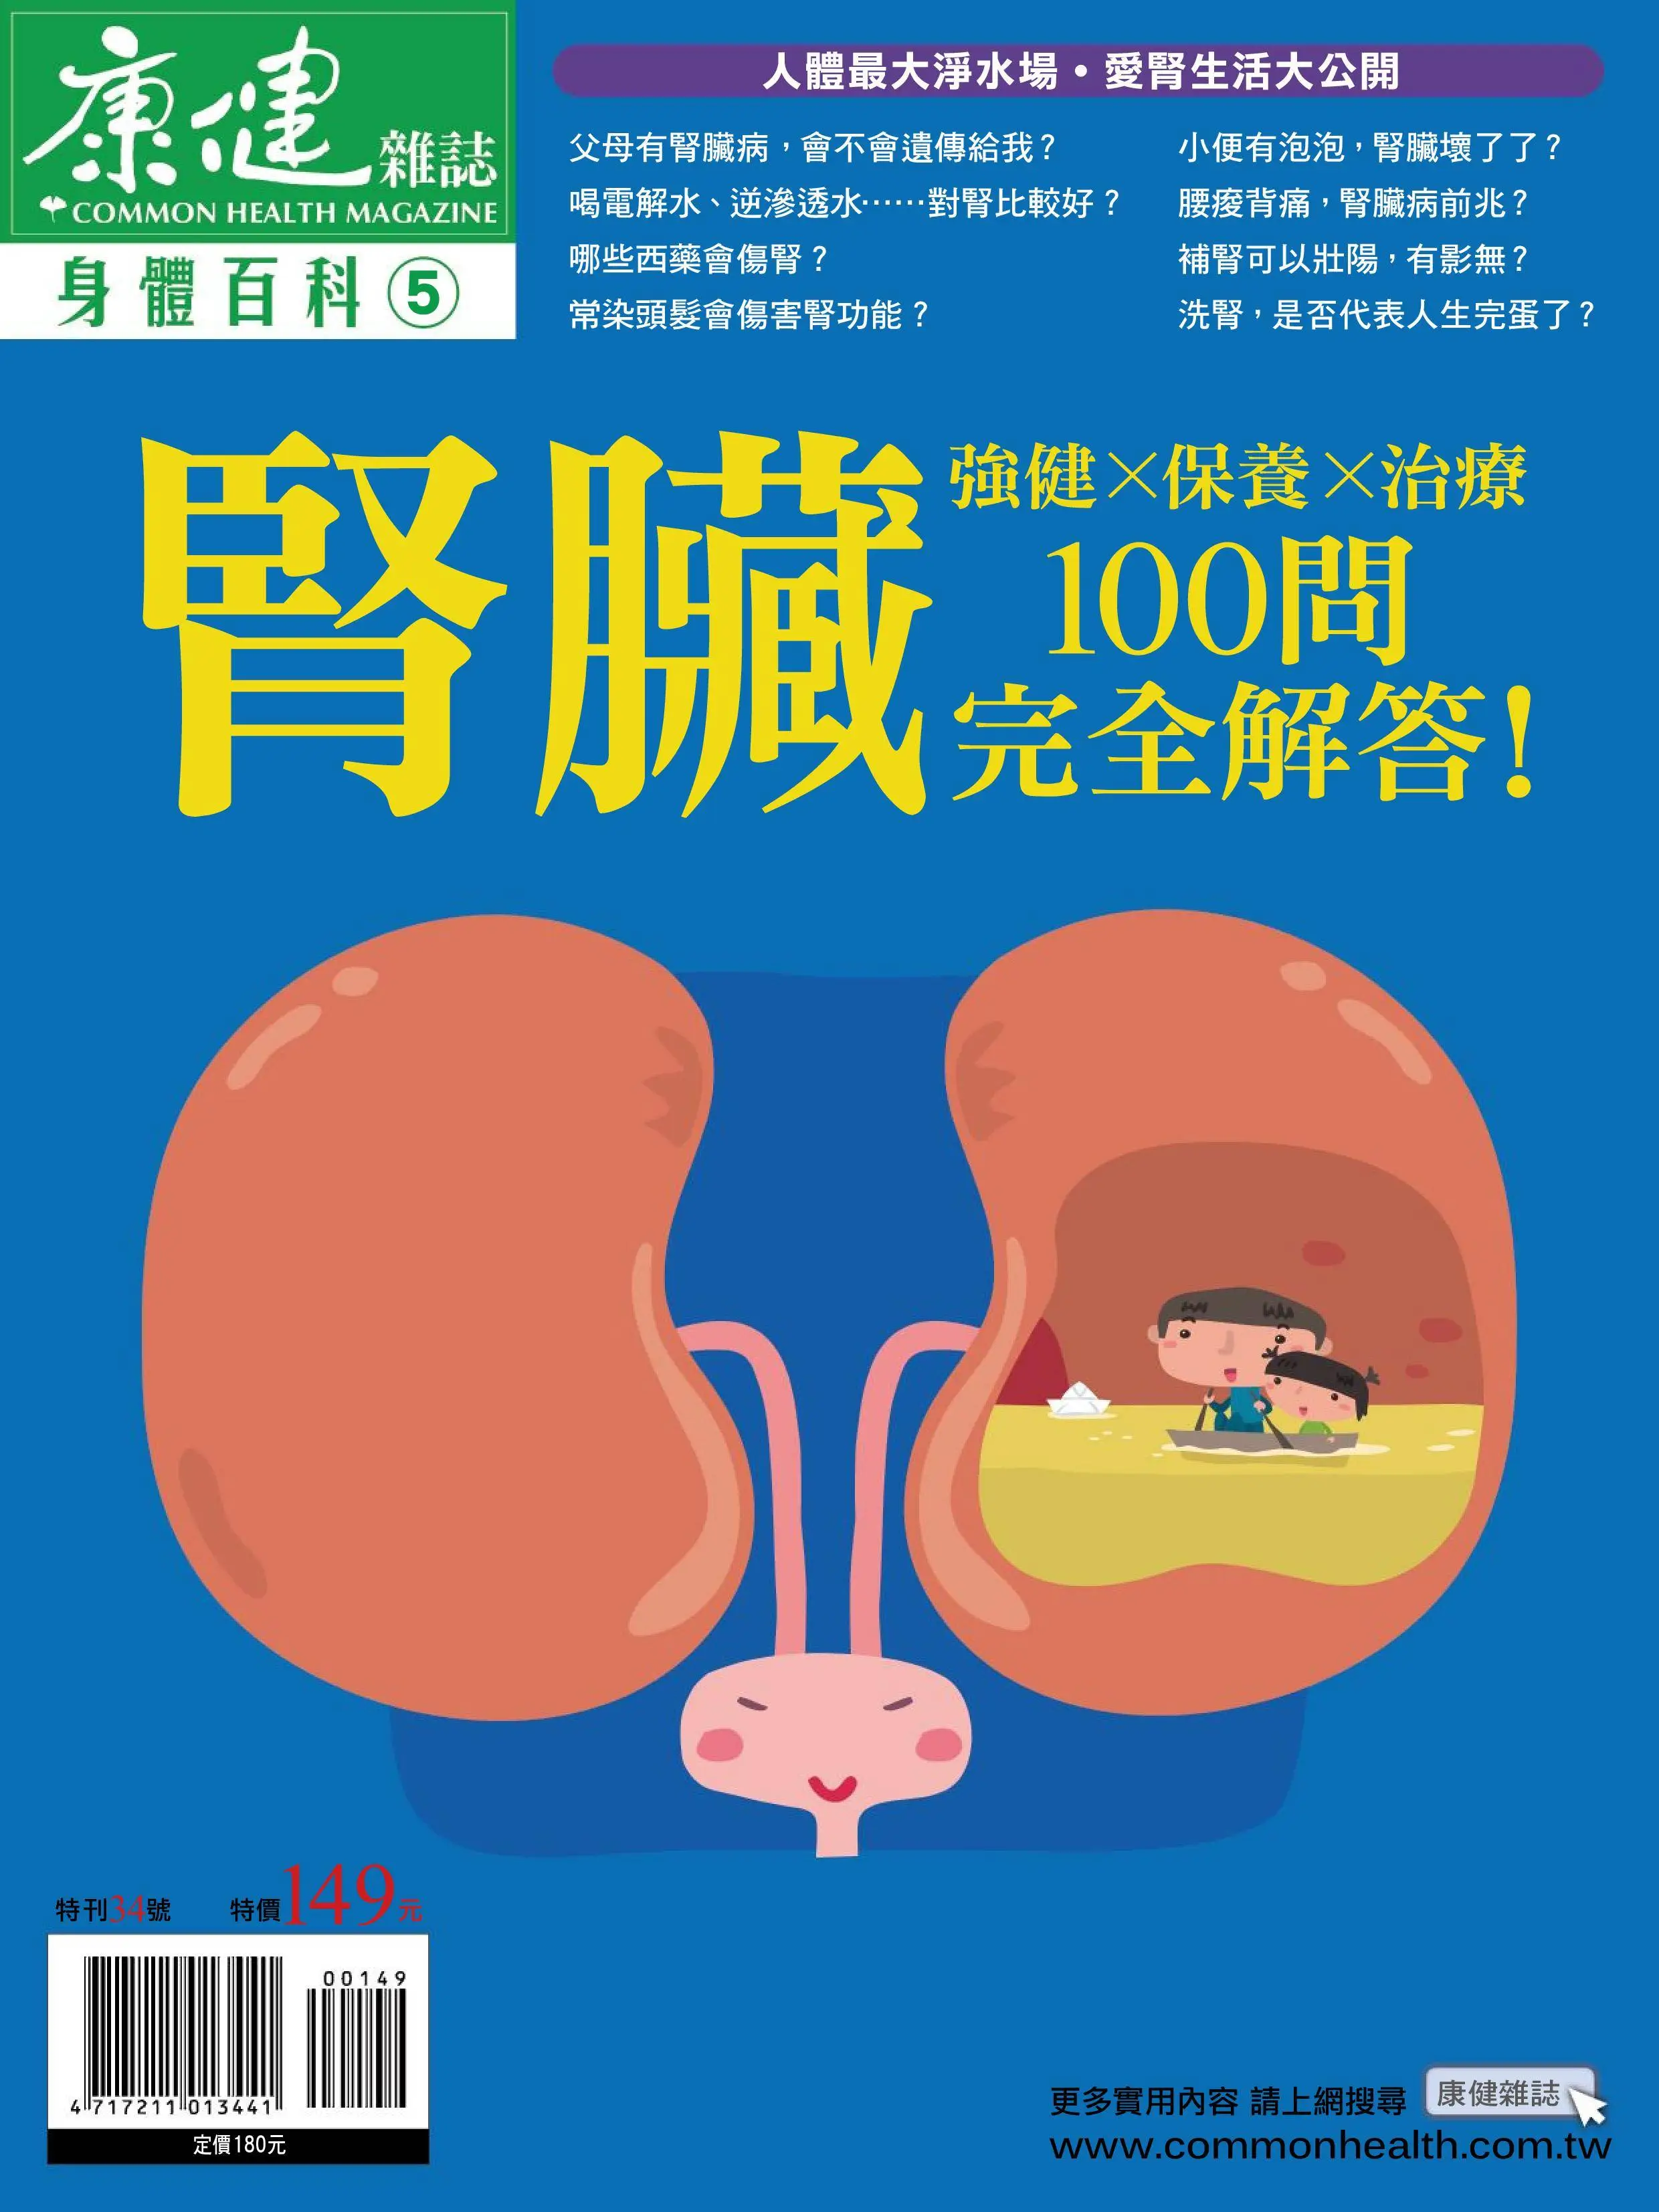 Common Health Special Issue 康健主題專刊 - 五月 01, 2013